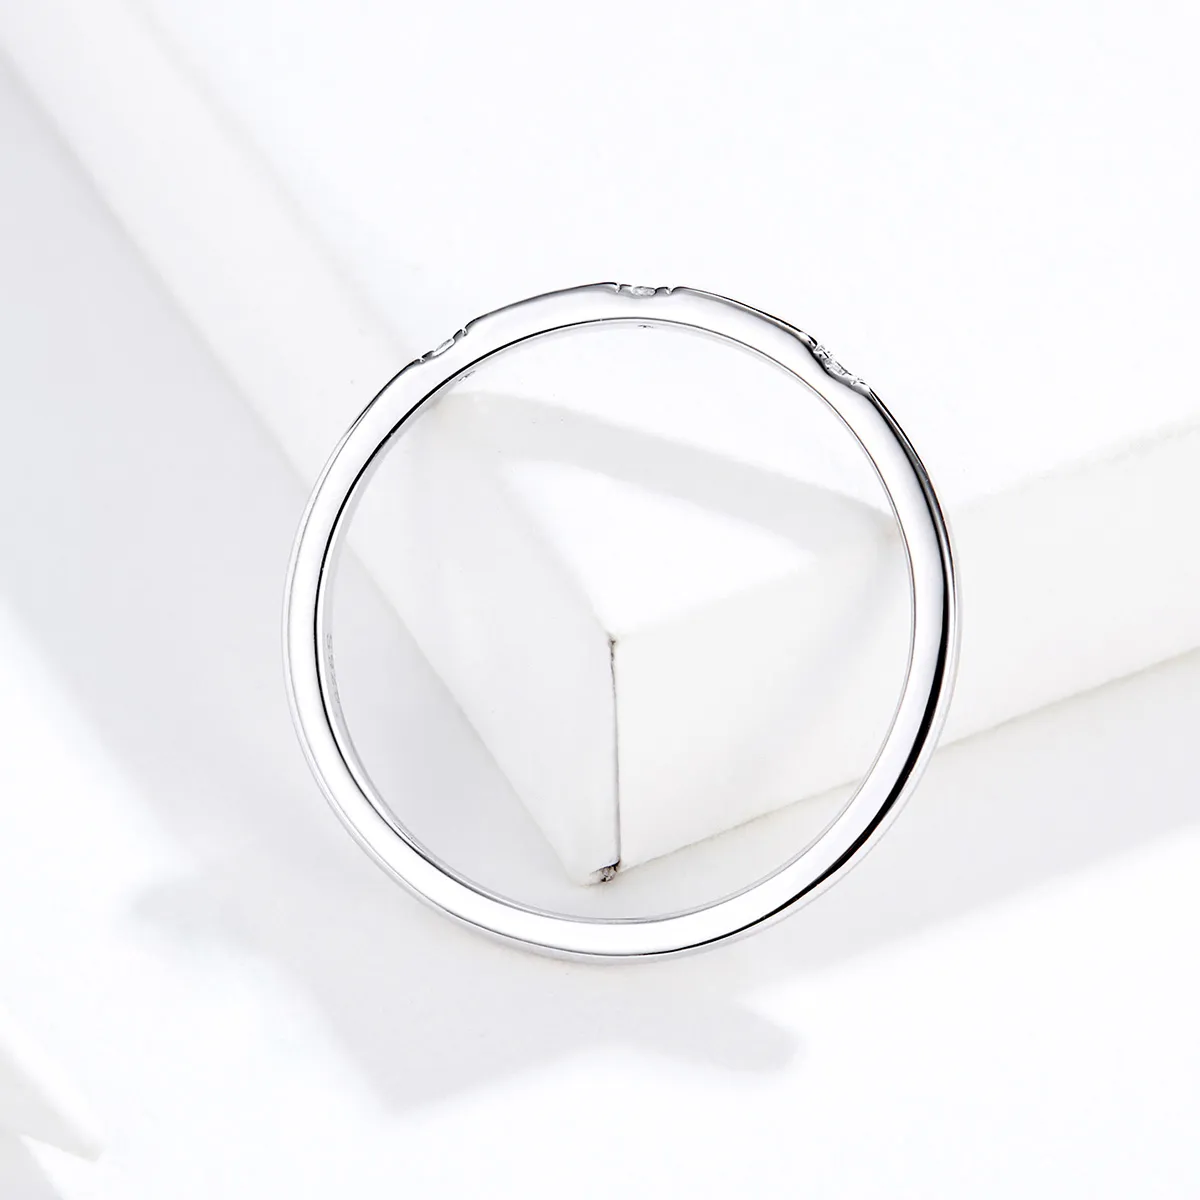 Pandora Style Silver Slim Ring - SCR591